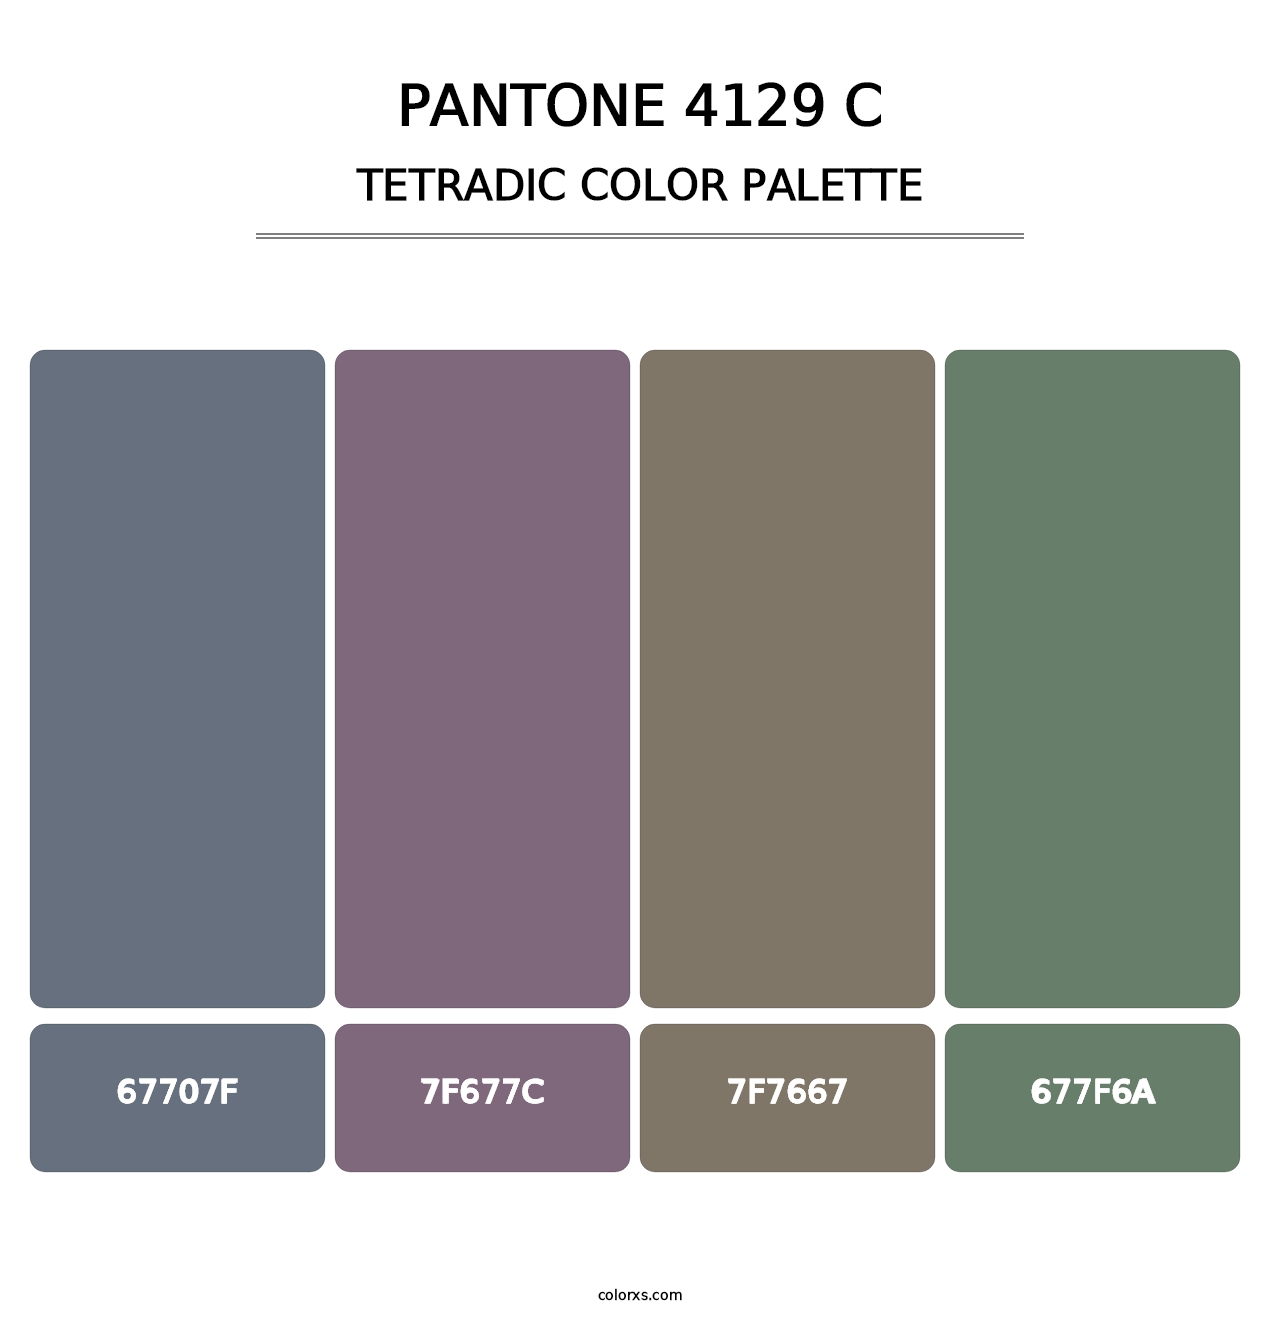 PANTONE 4129 C - Tetradic Color Palette